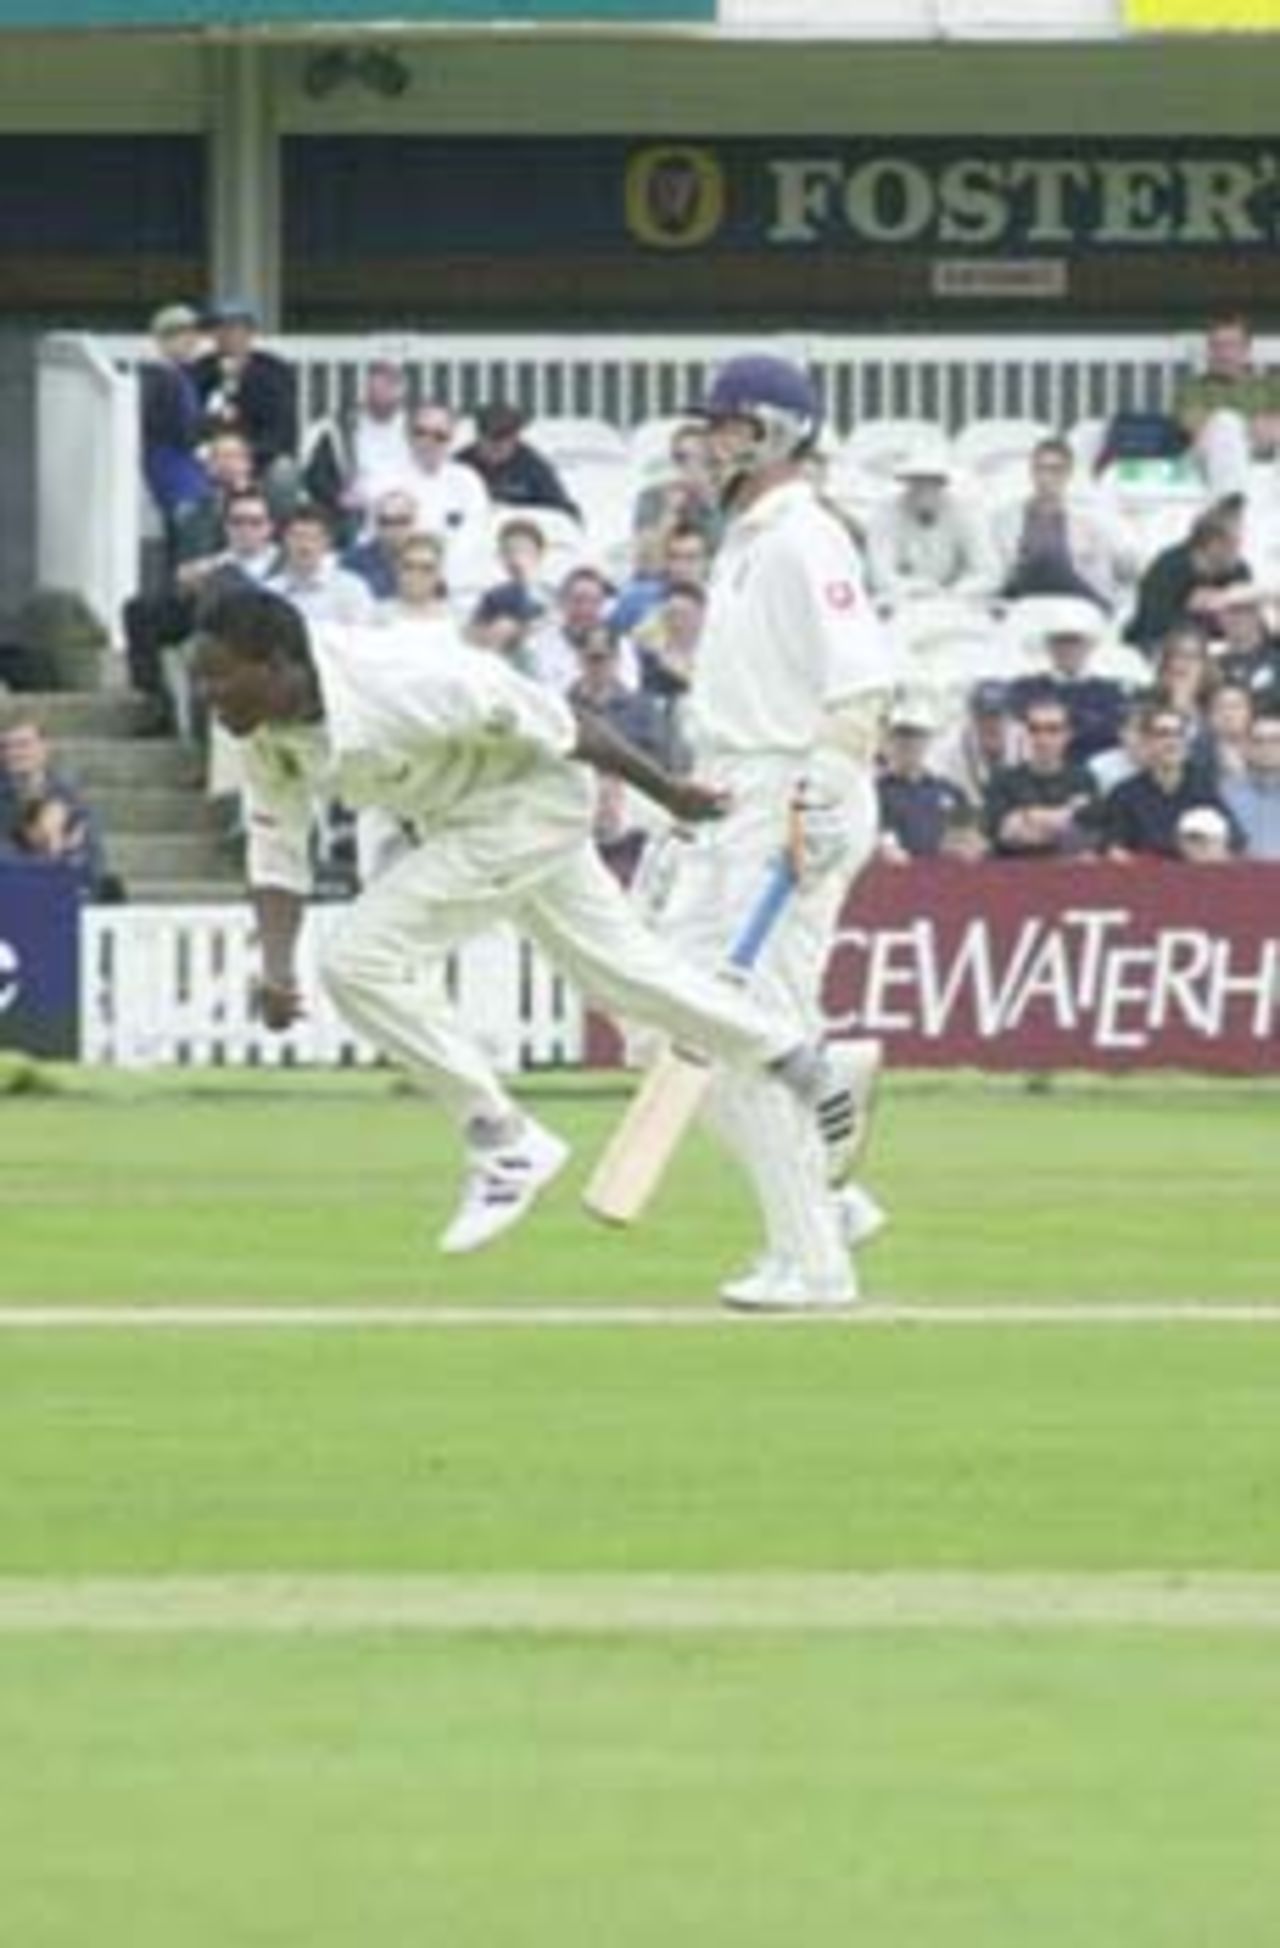 Mbangwa went wicketless in England's innings